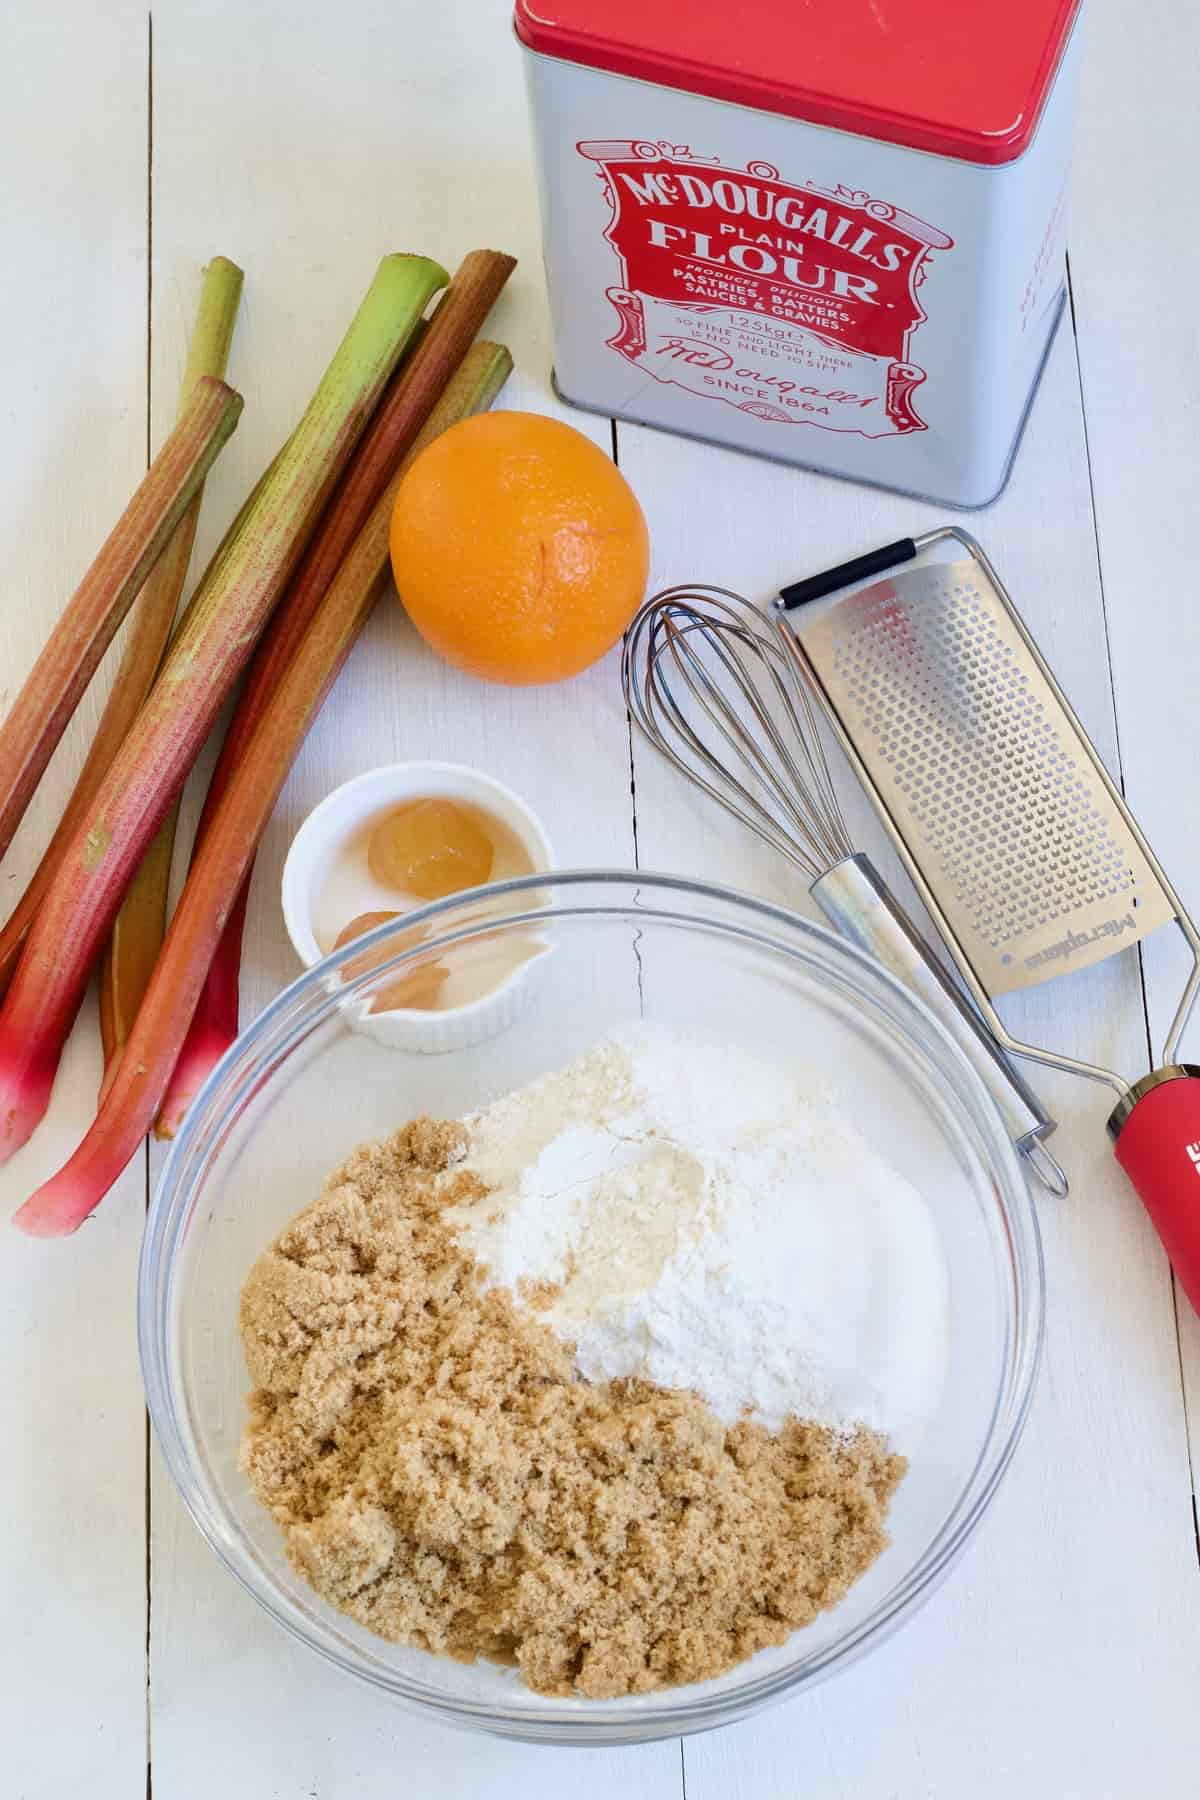 Ingredients for making rhubarb muffins.